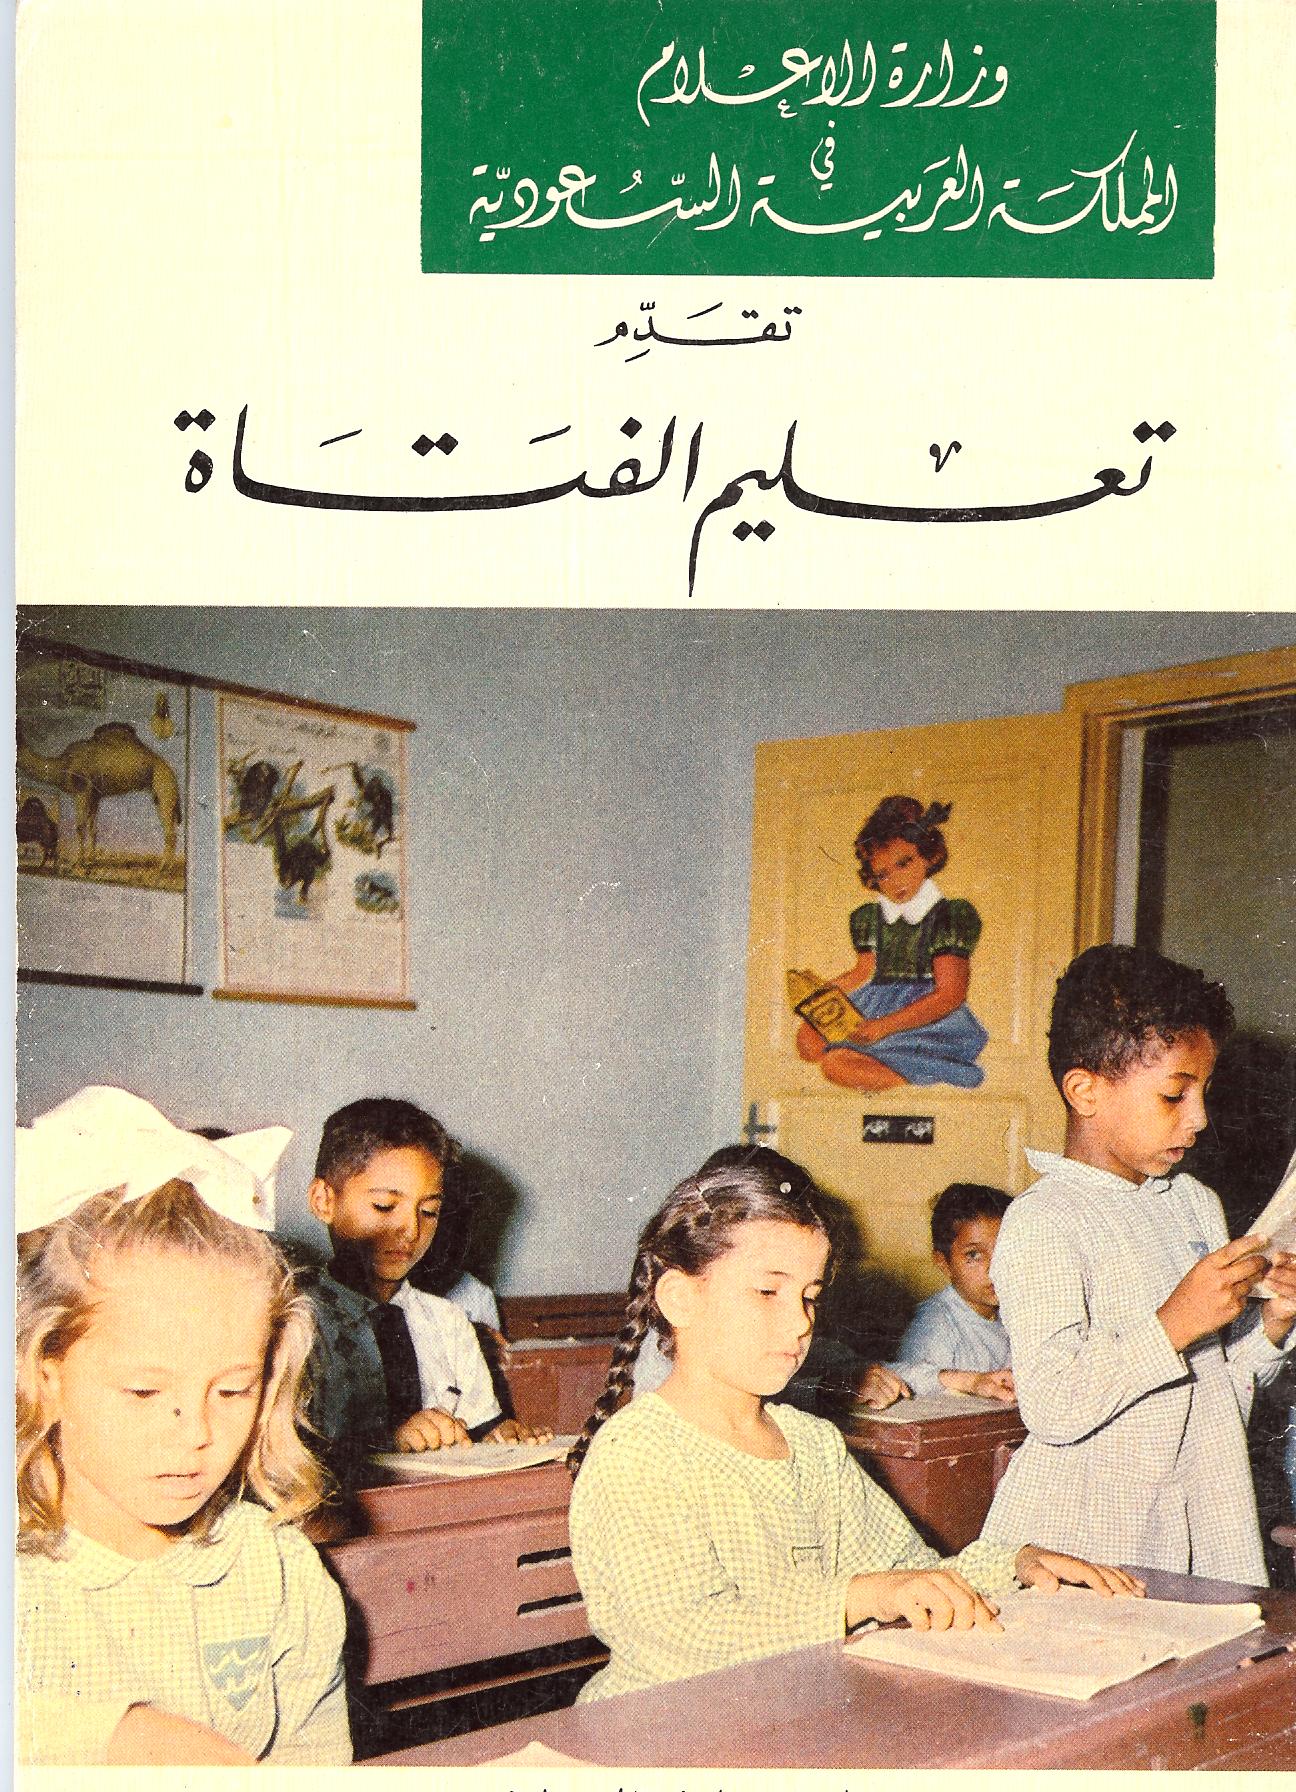 Establishment of Girls Education in the Kingdom